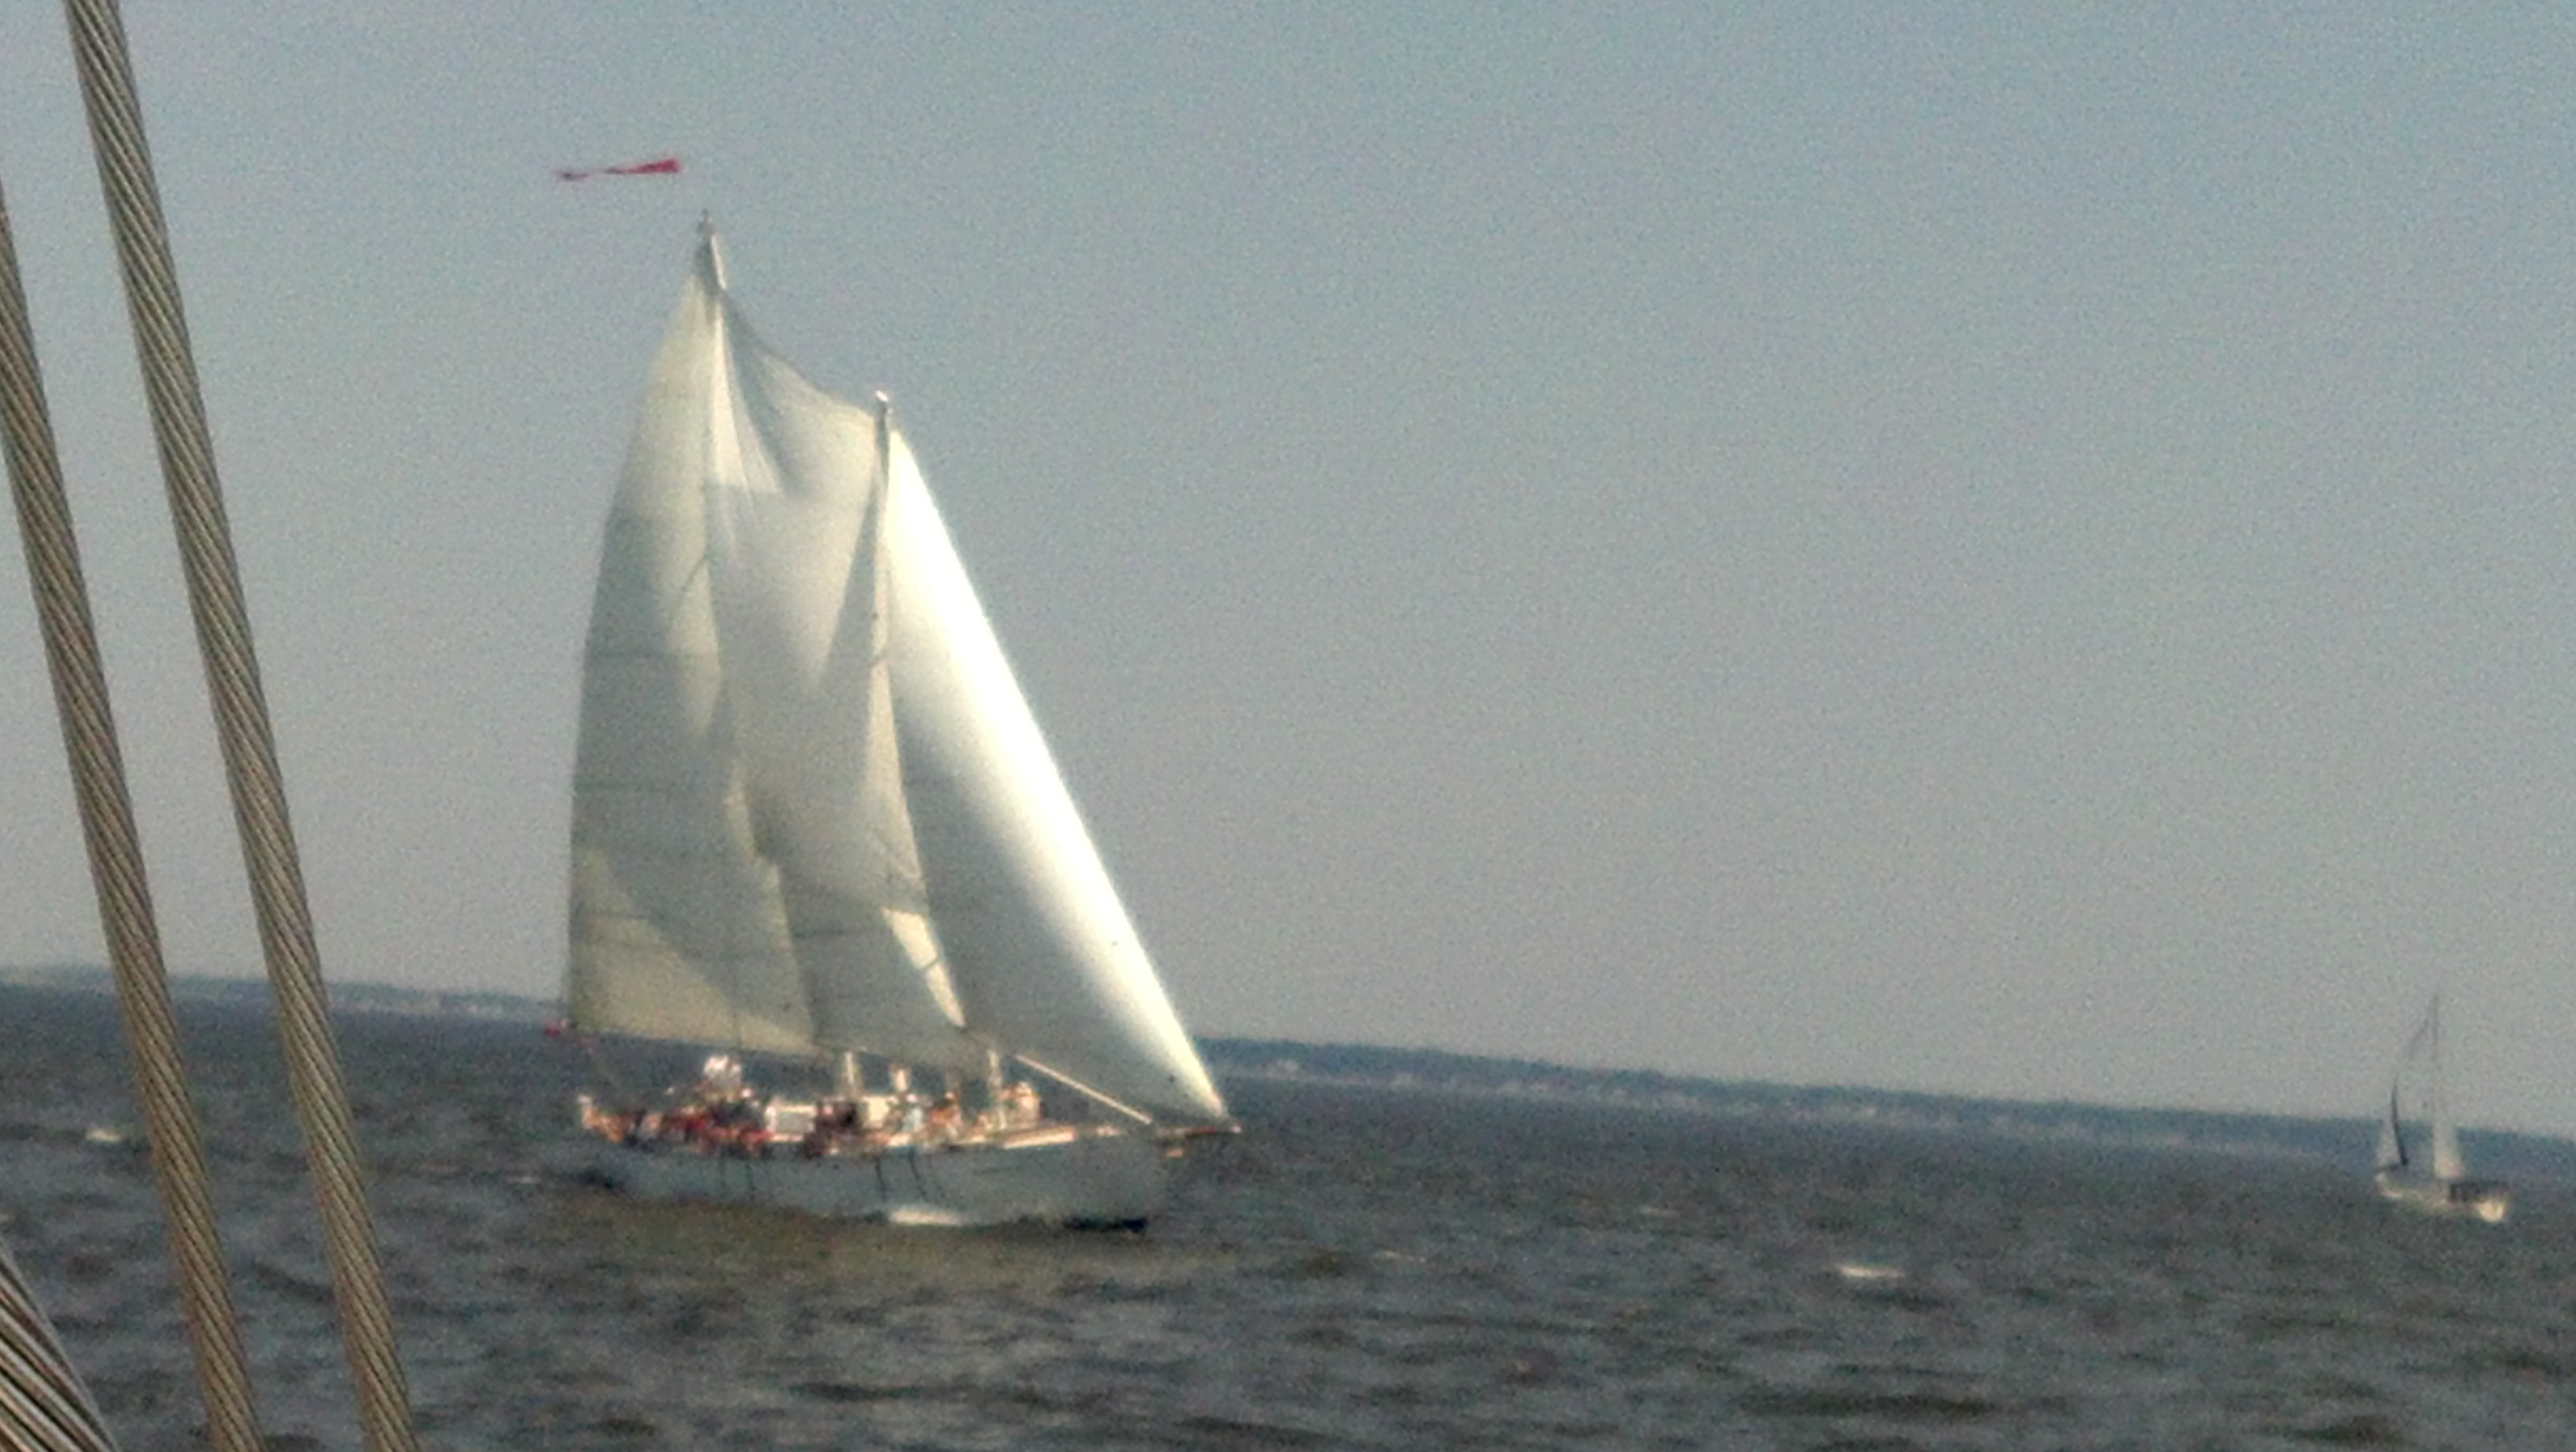 Schooner Woodwind saililng upwind